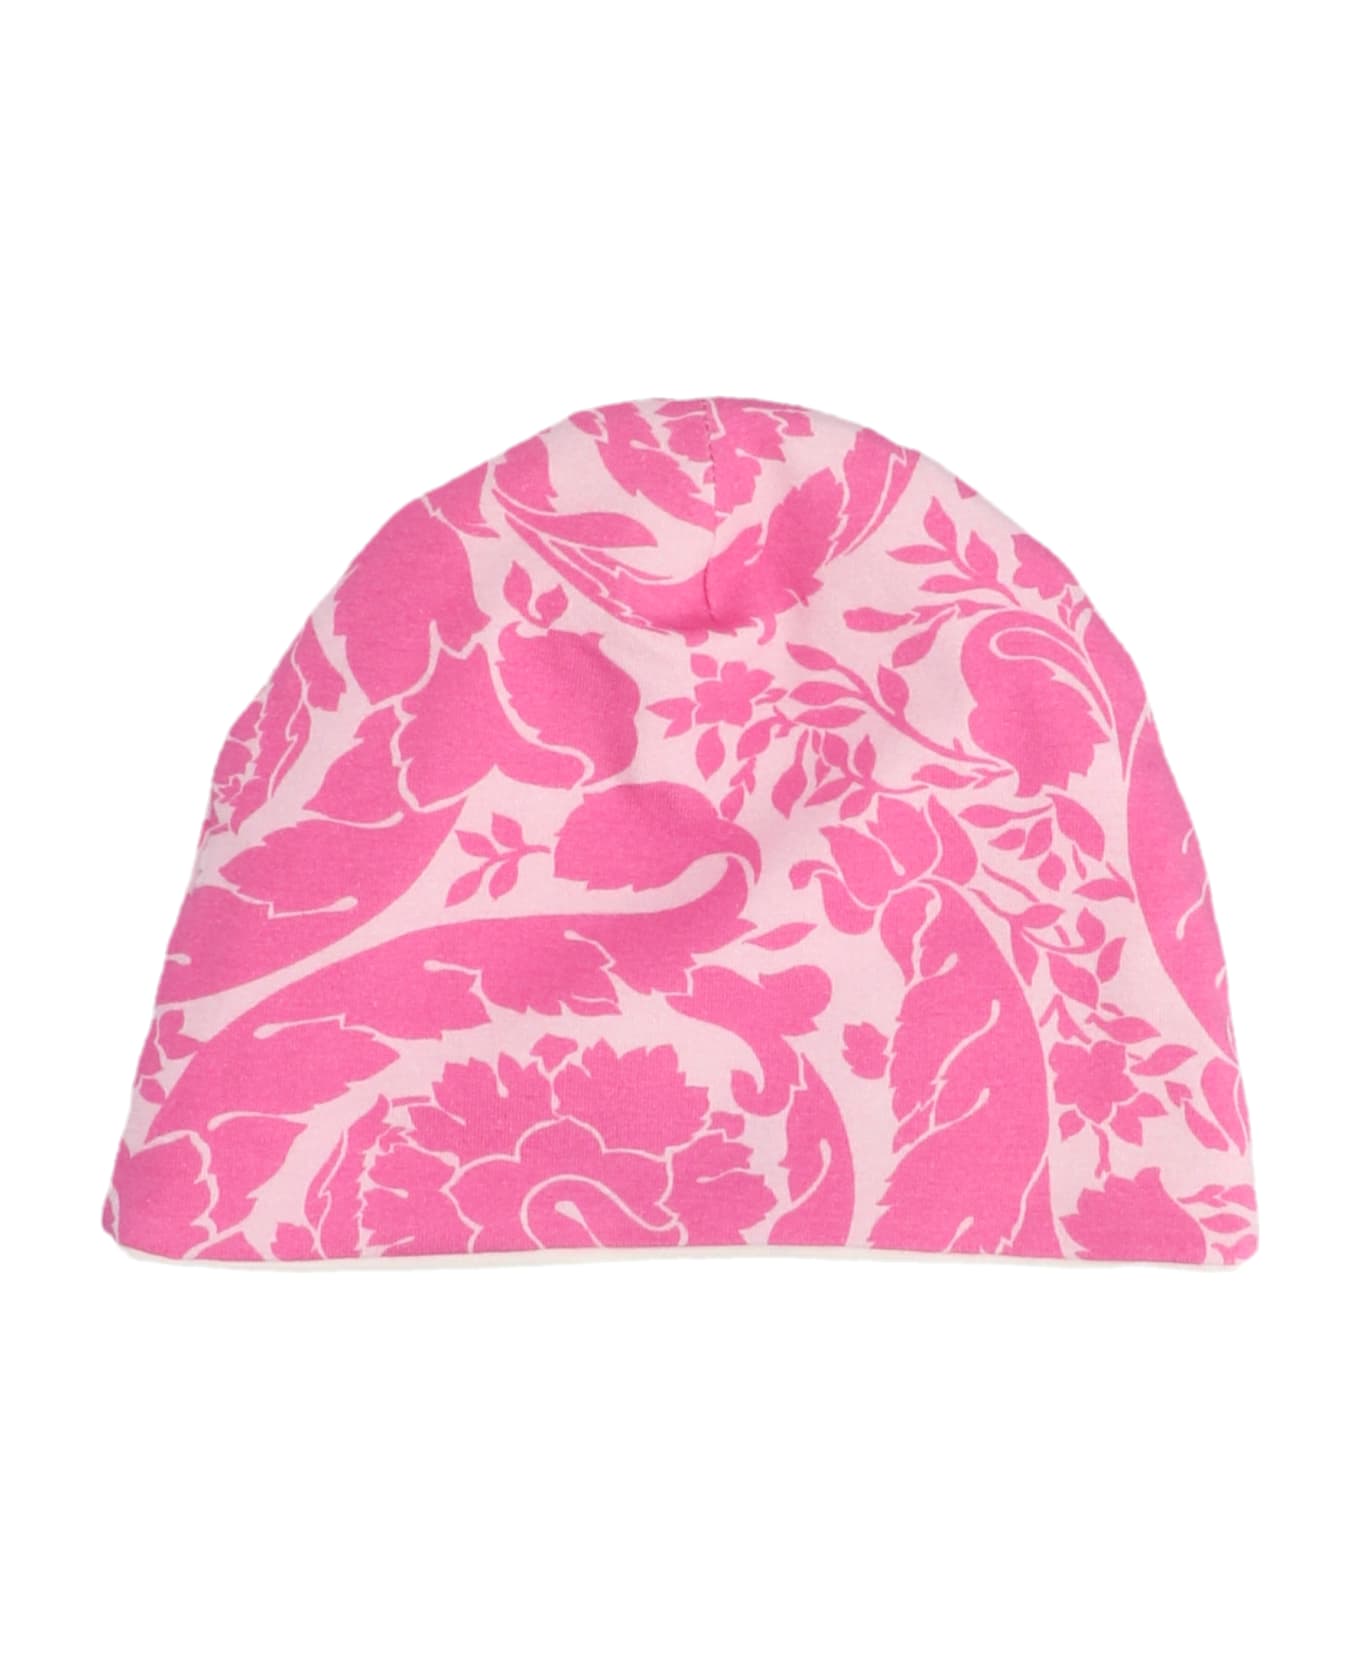 Versace 'barocco' Sleepsuit + Hat heather Baby Set - Pink